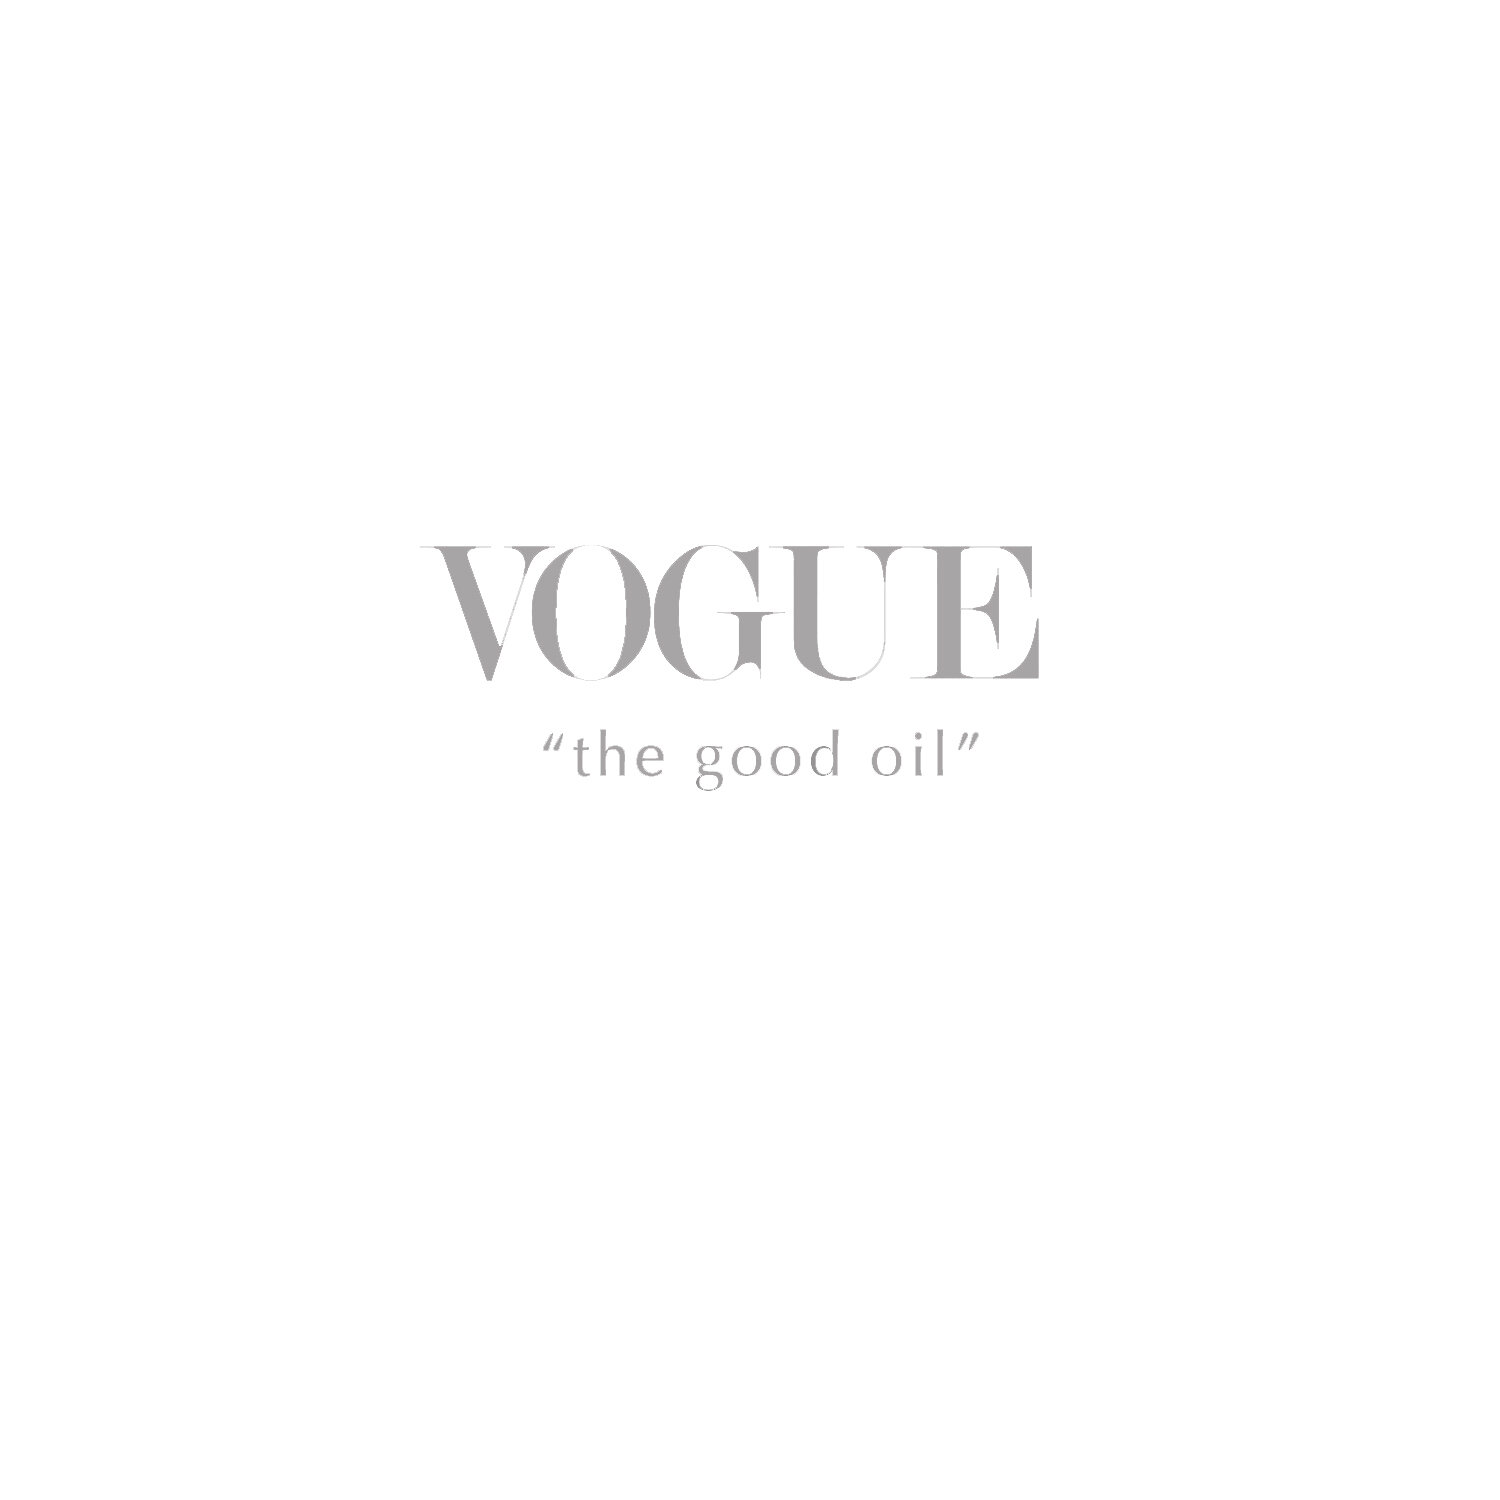 Vogue quote copy.jpg